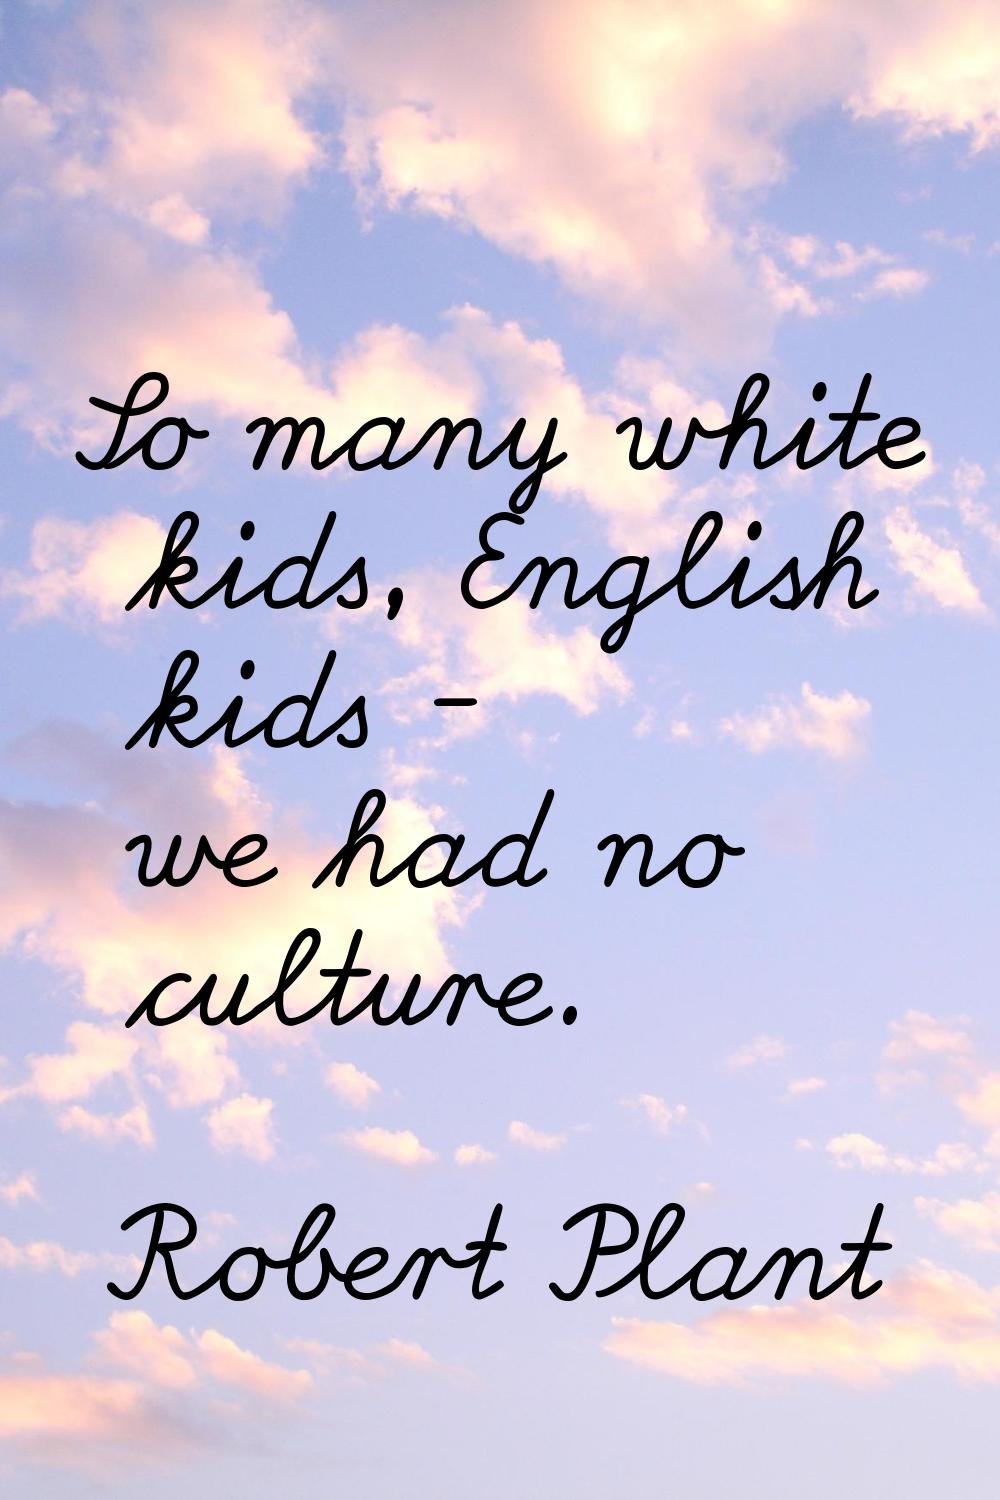 So many white kids, English kids - we had no culture.